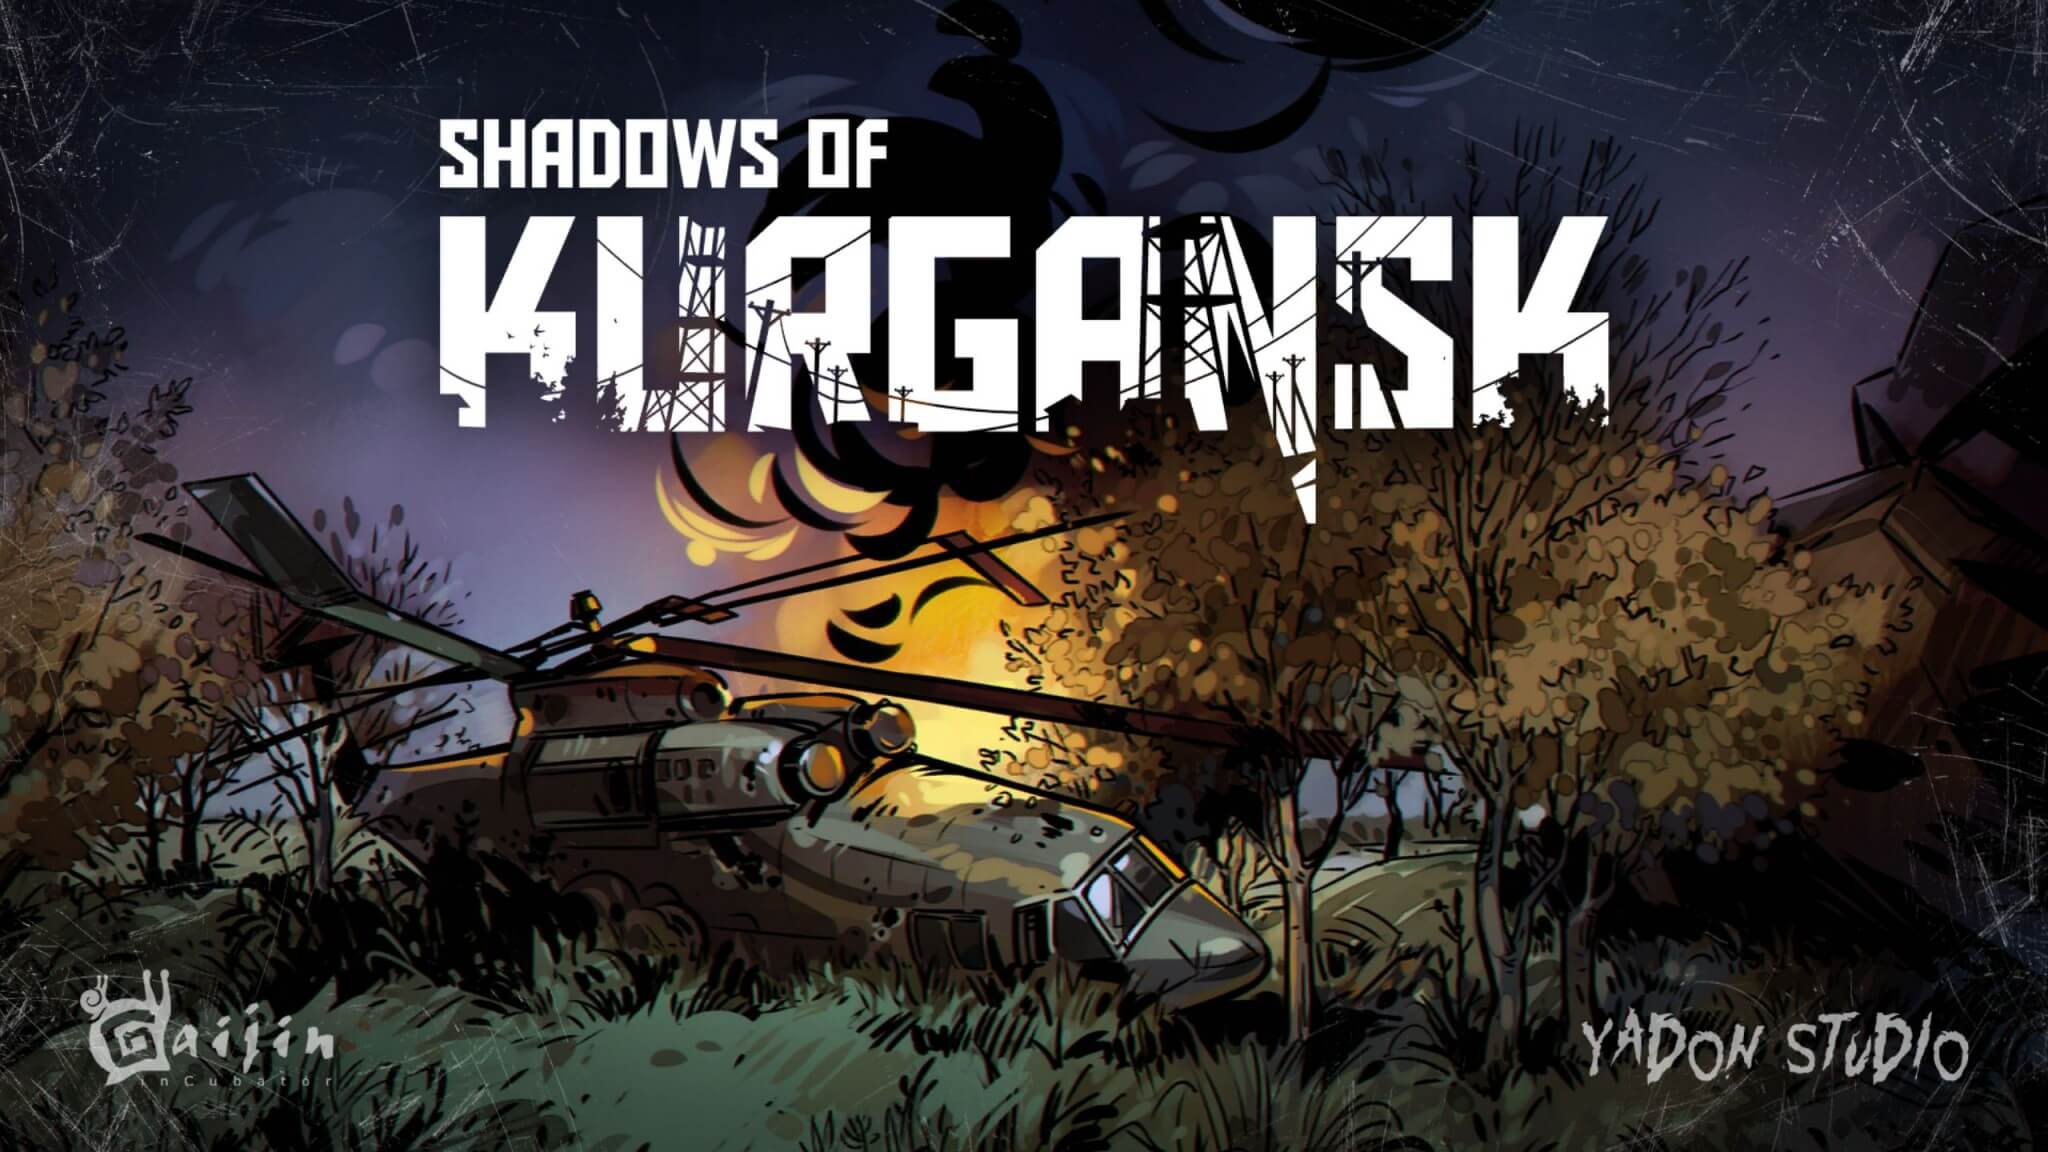 Shadows of Kurgansk (Bildrechte: Gaijin inCubator)